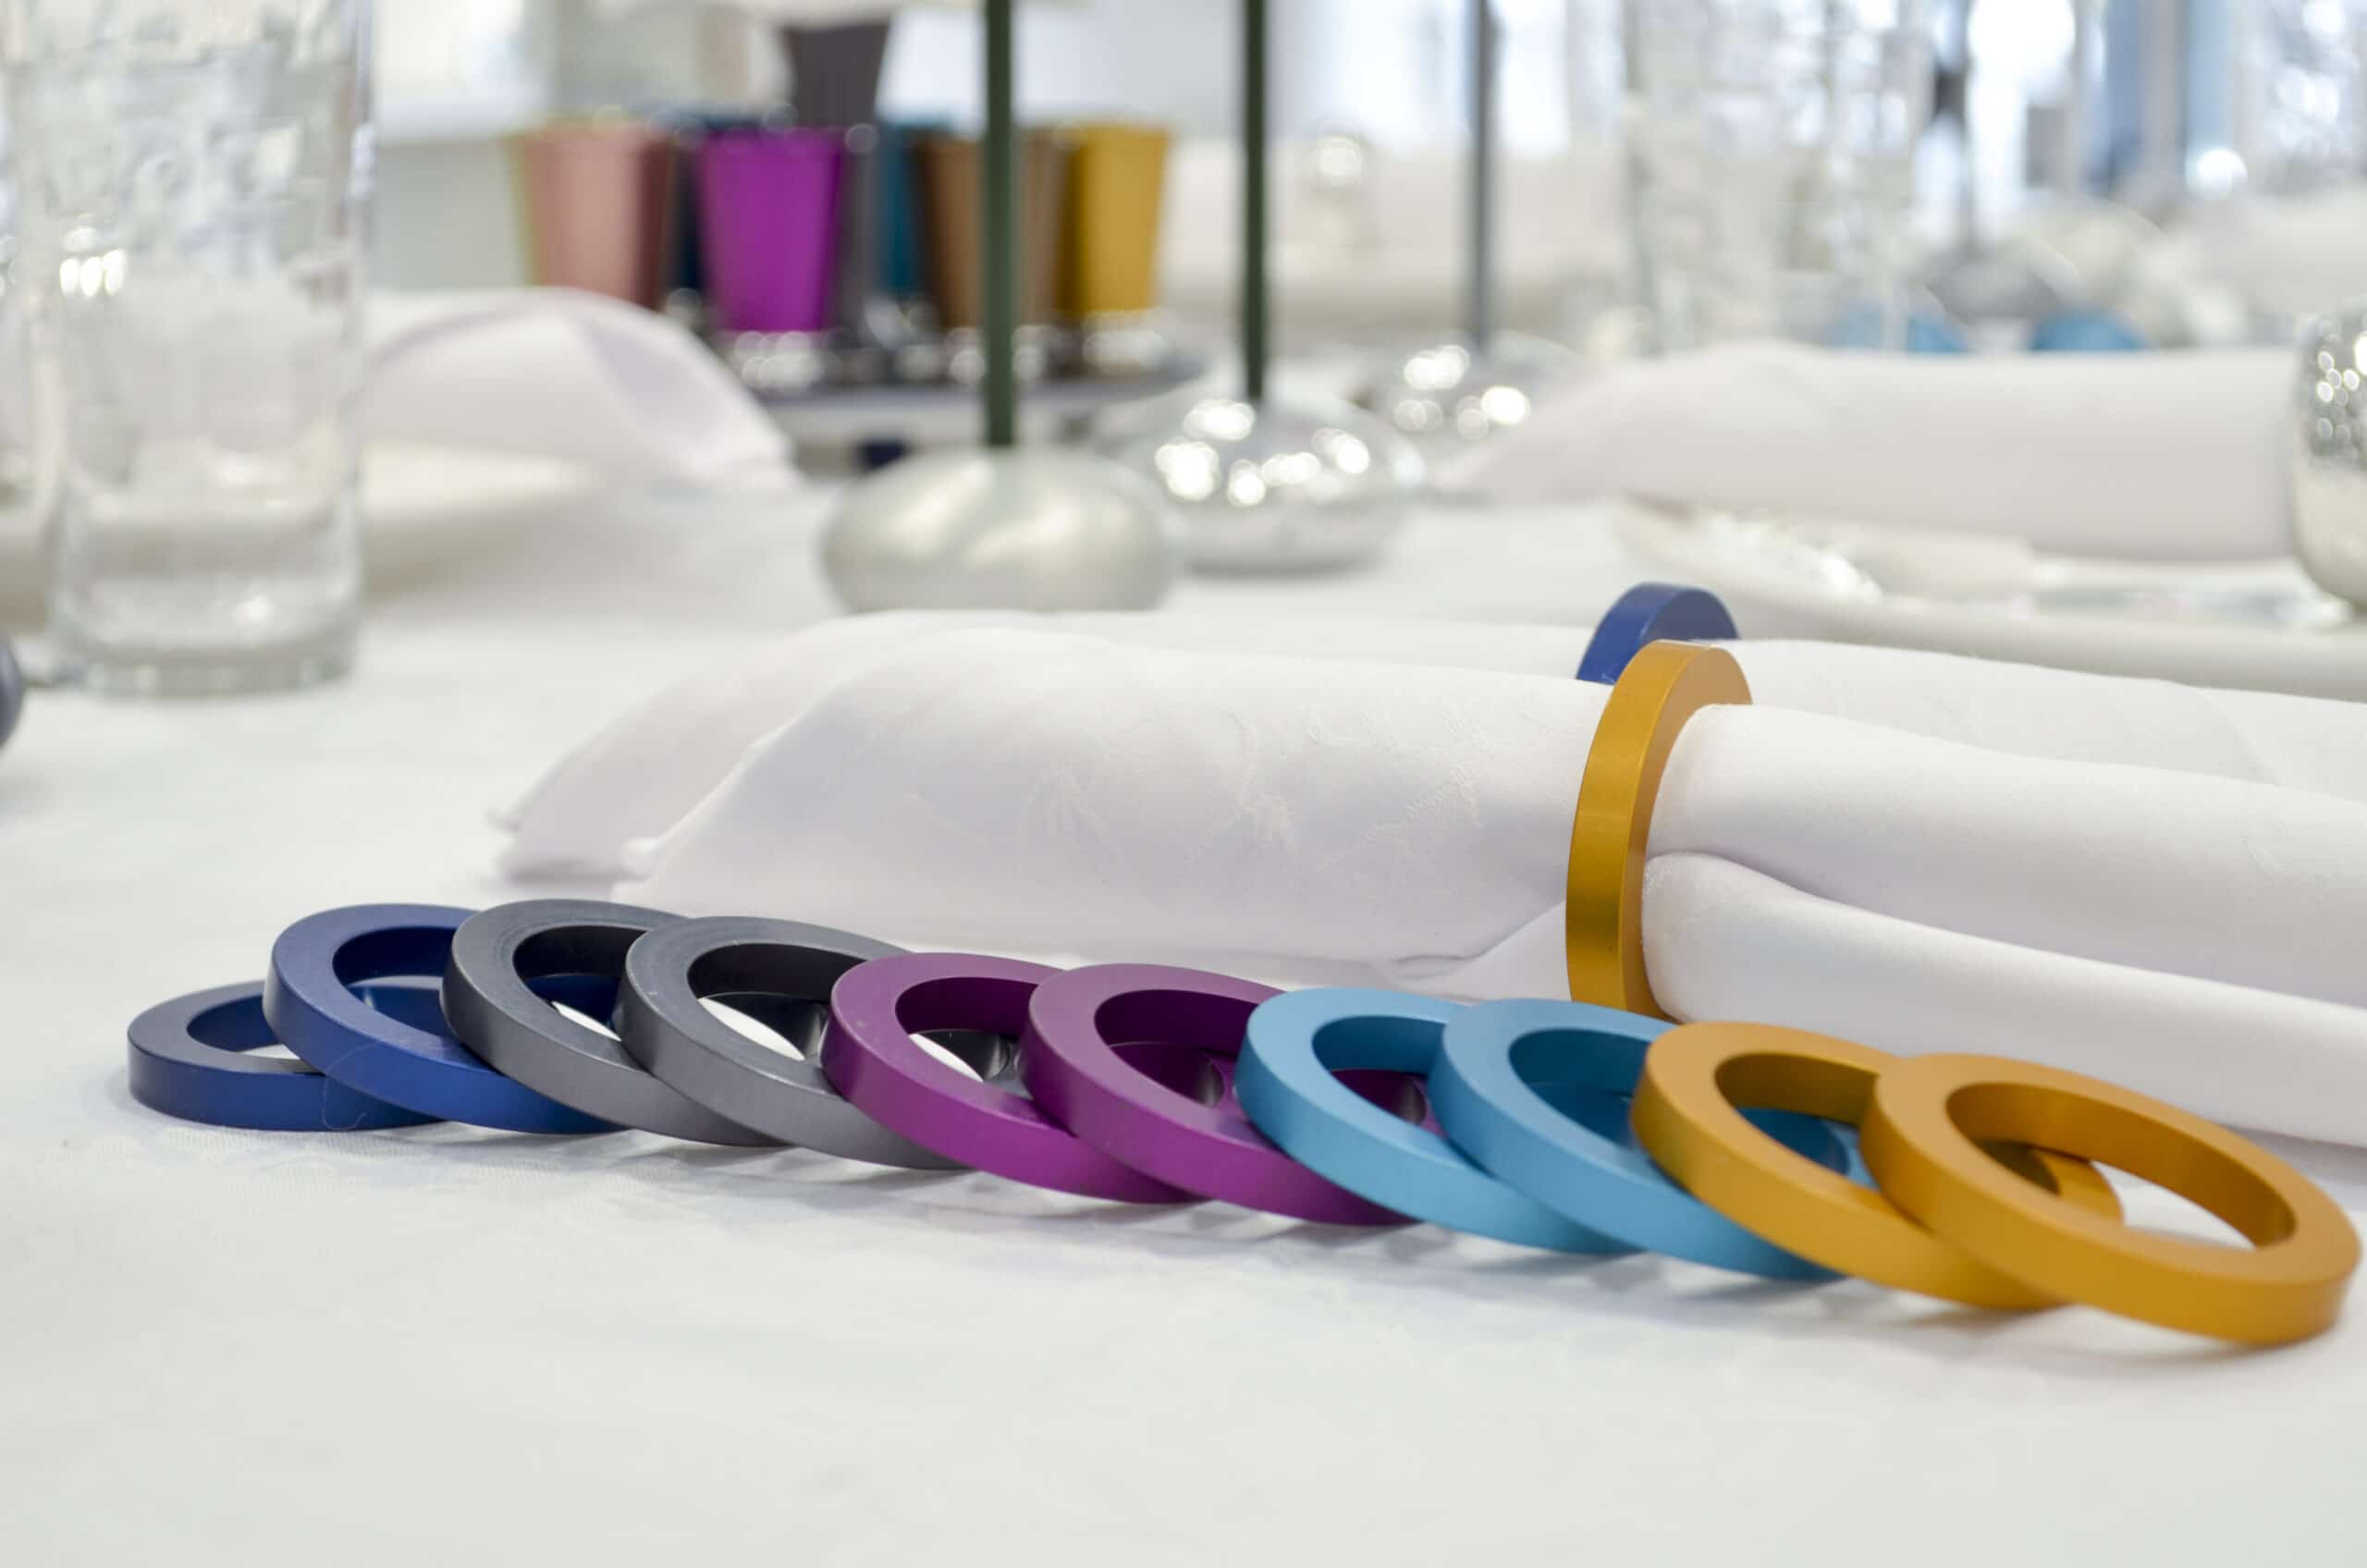 Colorful Aluminum Napkin Holder Rings